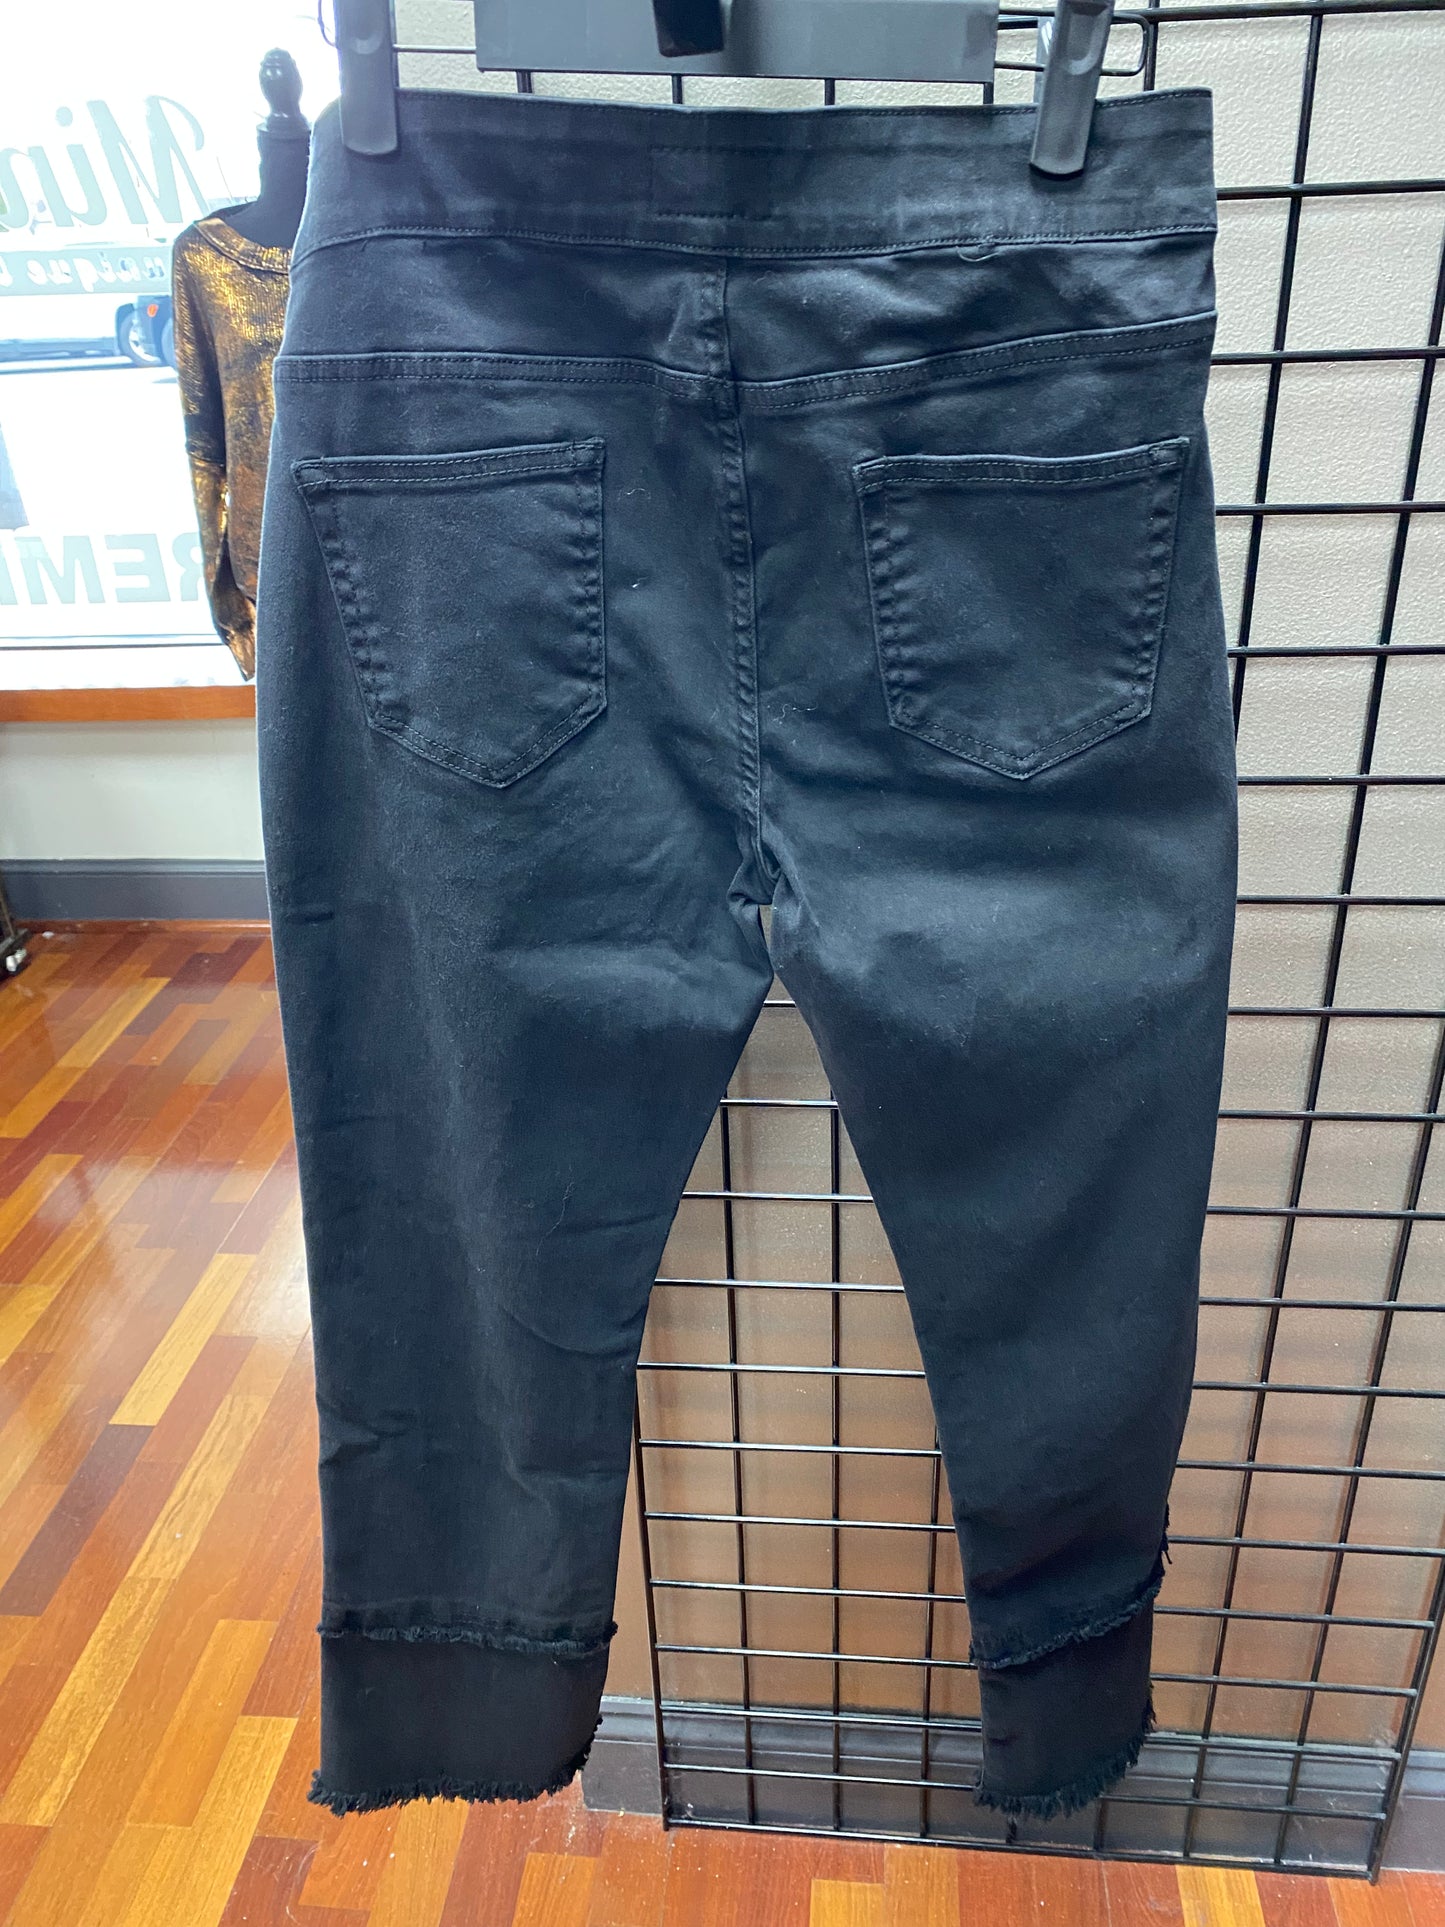 AZI Frayed Bottom Black Denim Jeans Pull On Pants